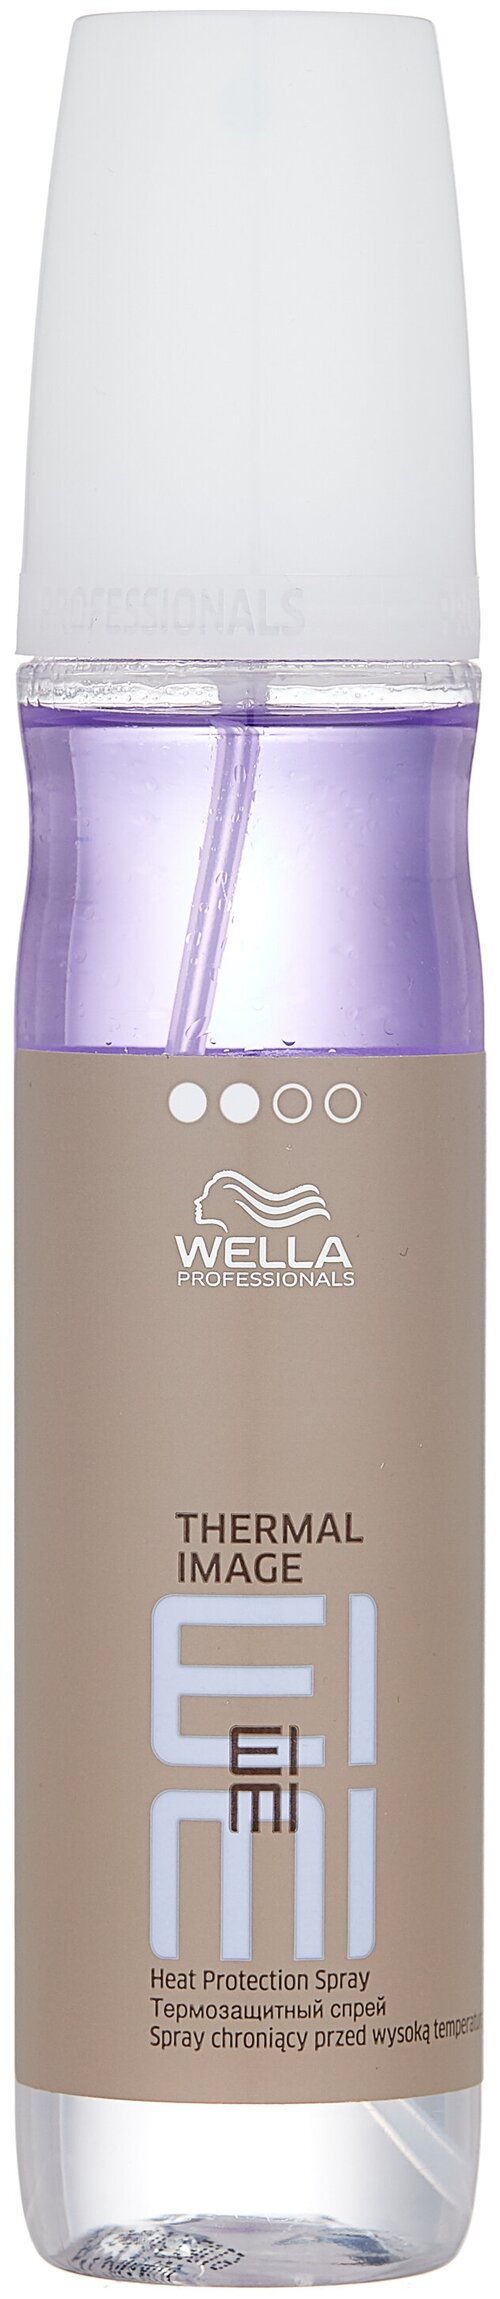 Wella Professionals Термозащитный спрей Eimi Thermal image, средняя фиксация, 150 г, 150 мл